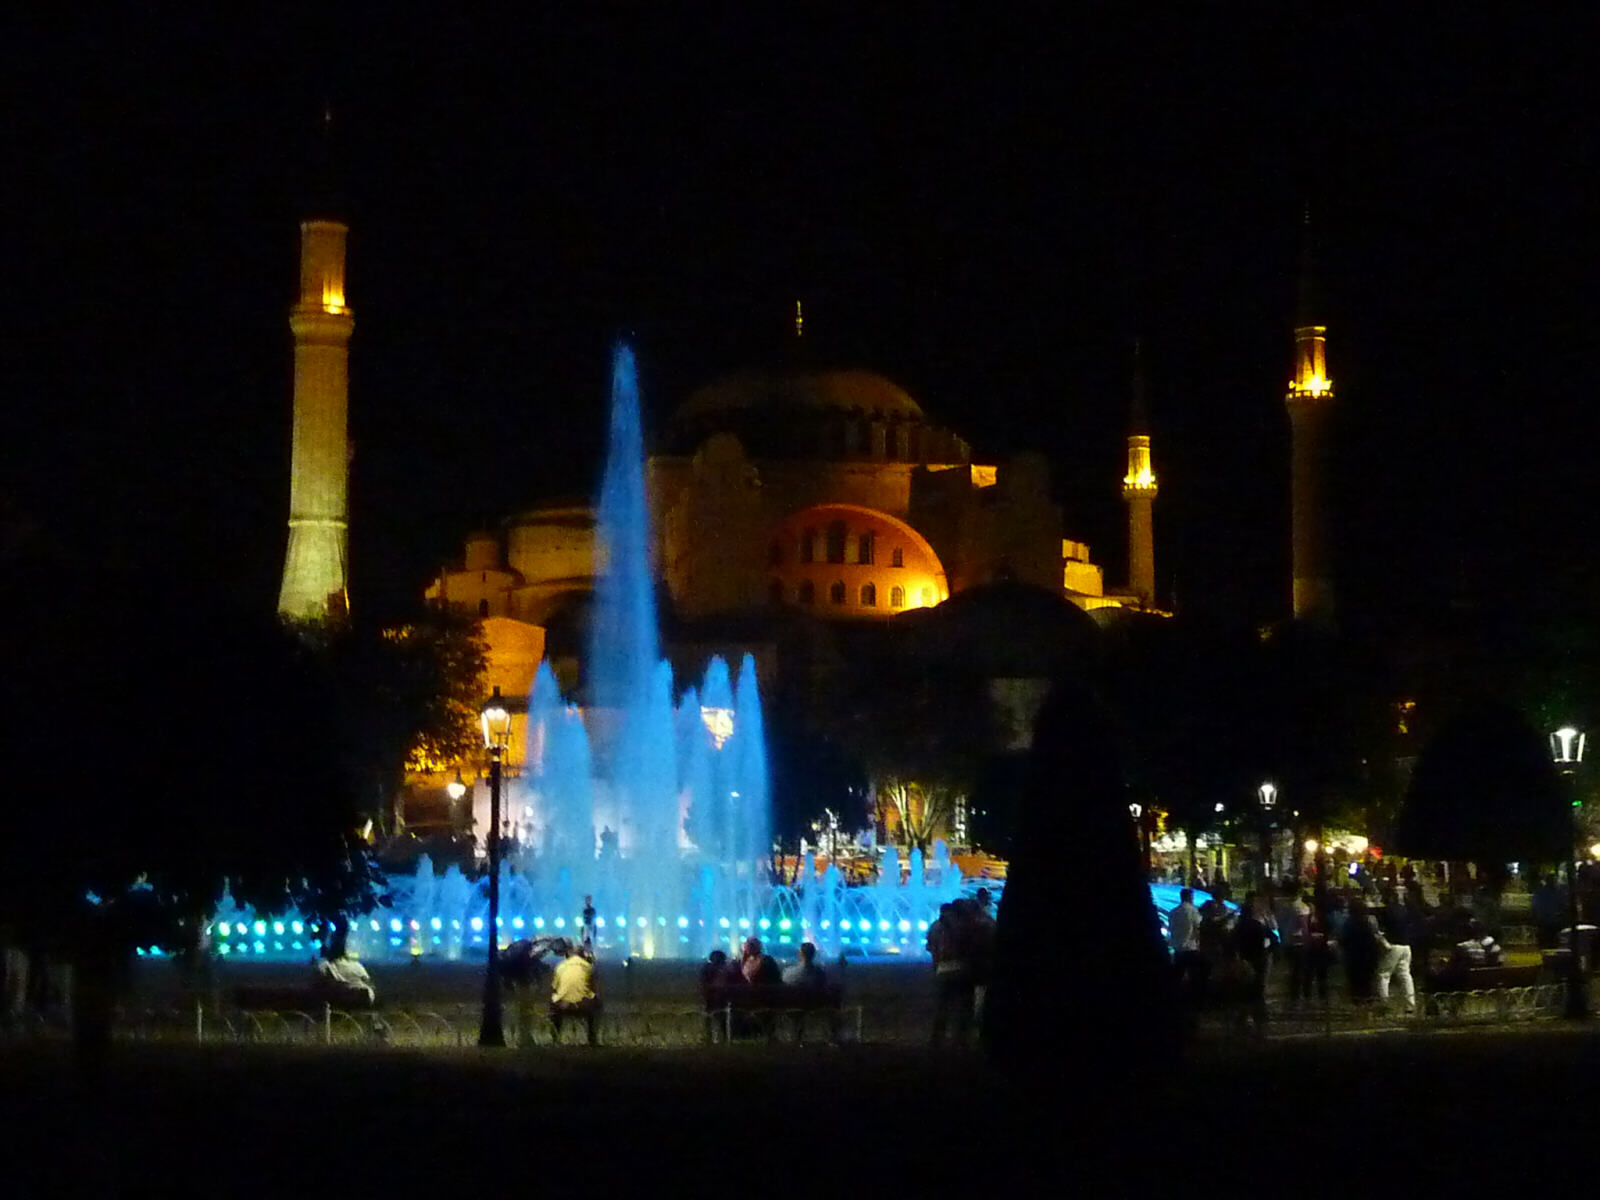 Hagia Sophia in Istanbul at night-time